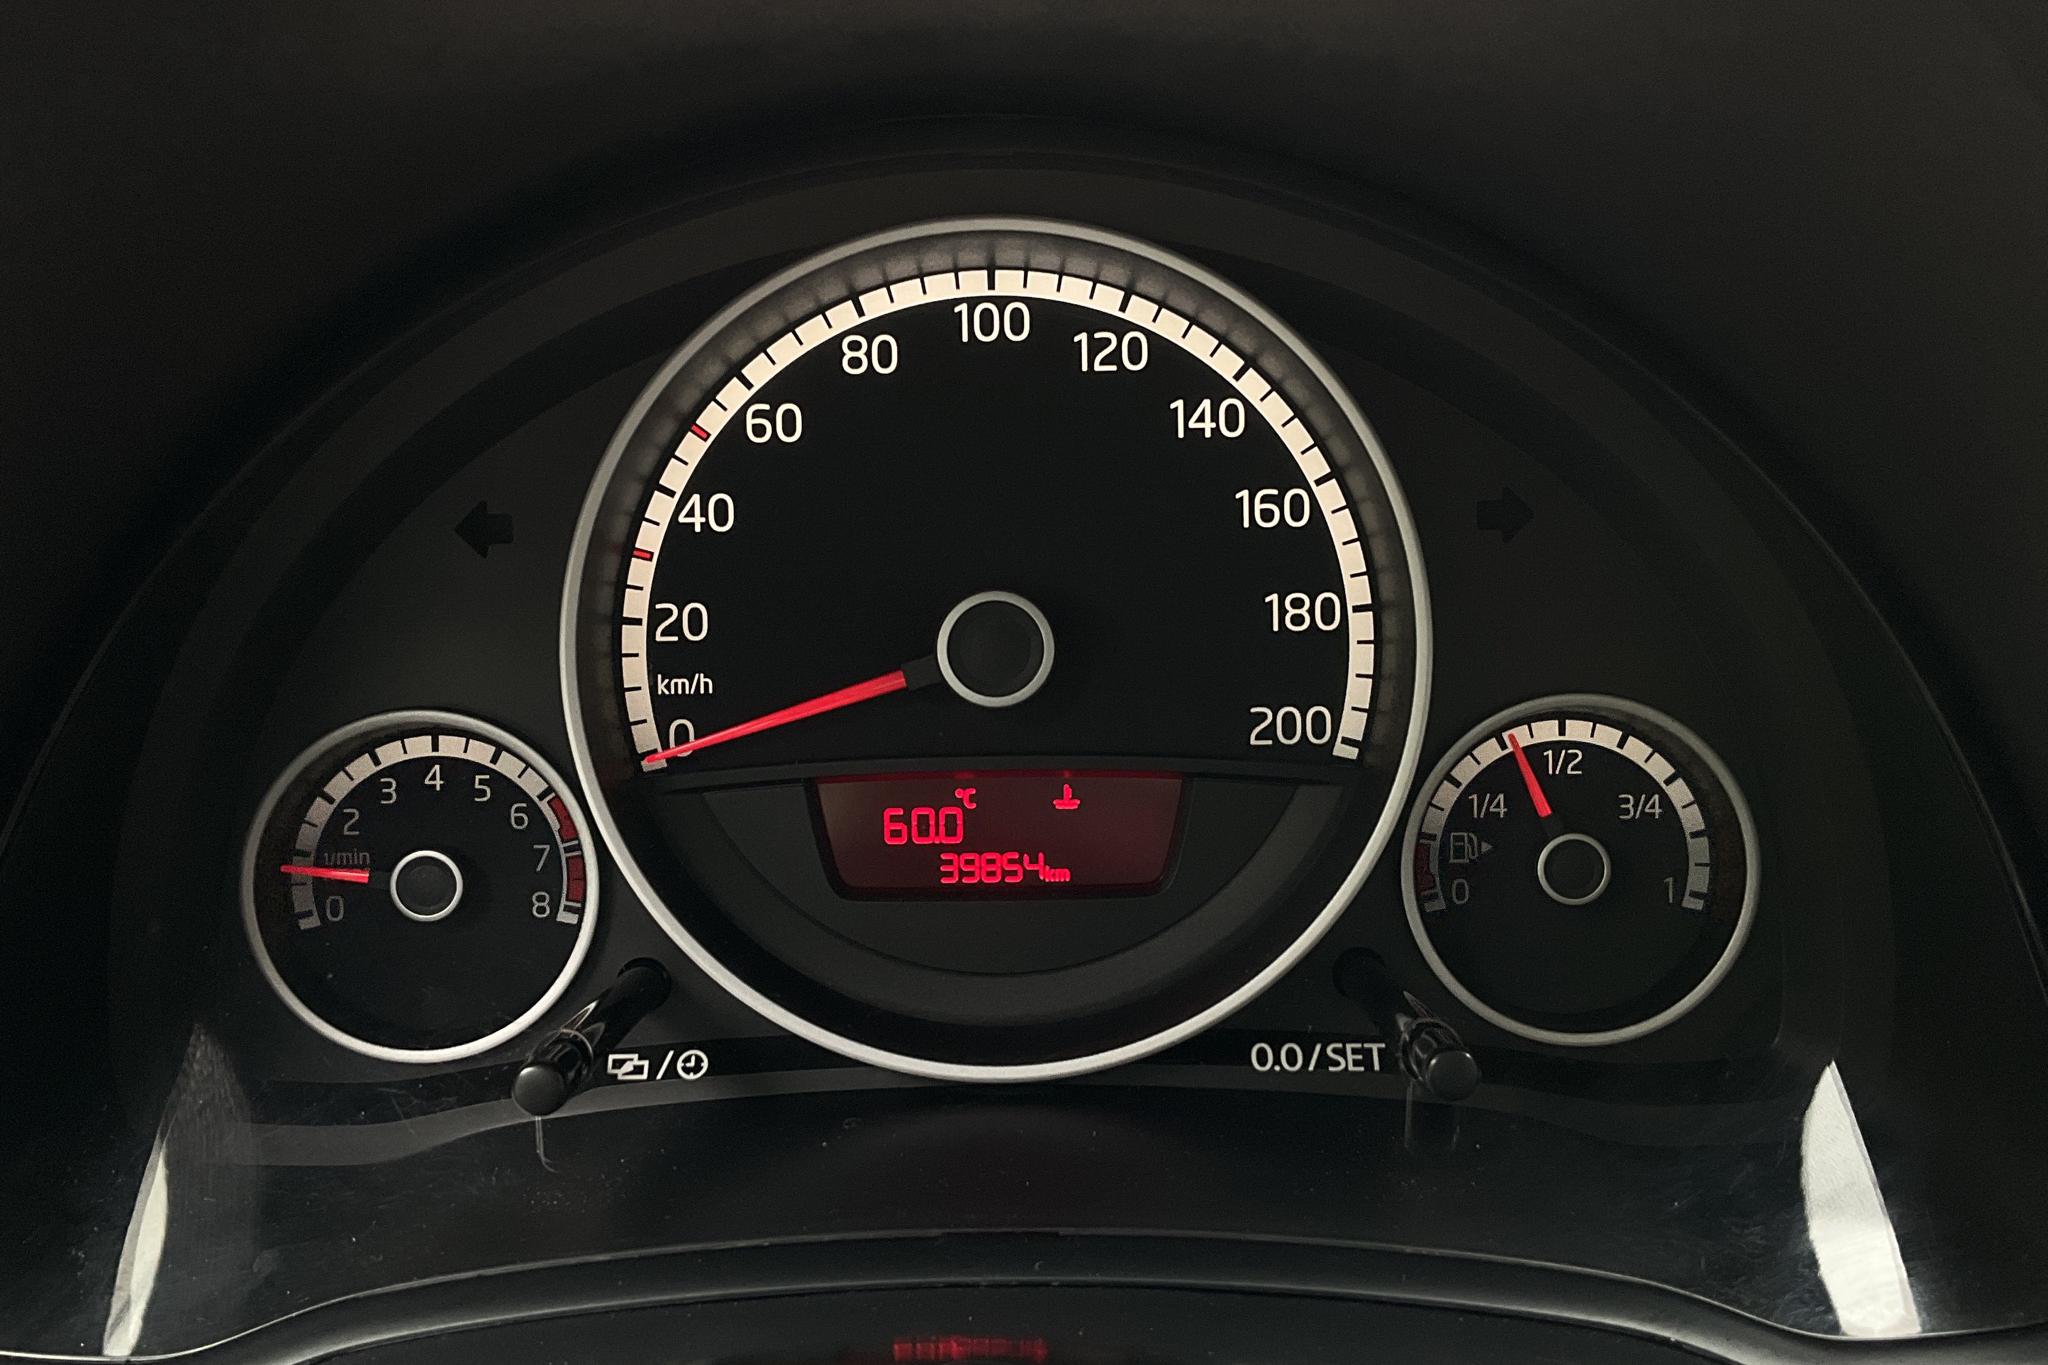 VW up! 1.0 TFSI Cross (75hk) - 39 860 km - Manual - white - 2016